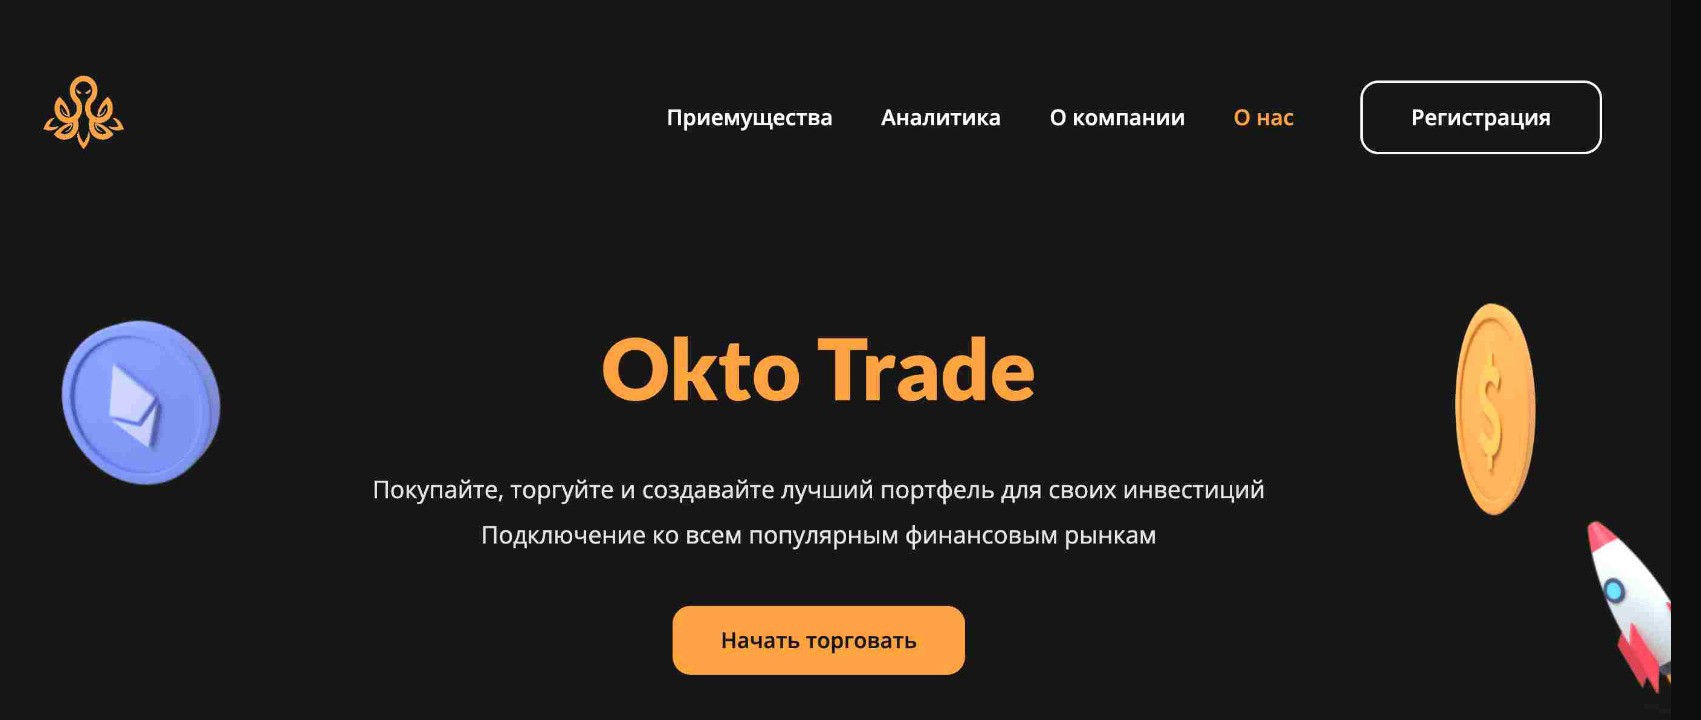 Сайт компании Oktotrade